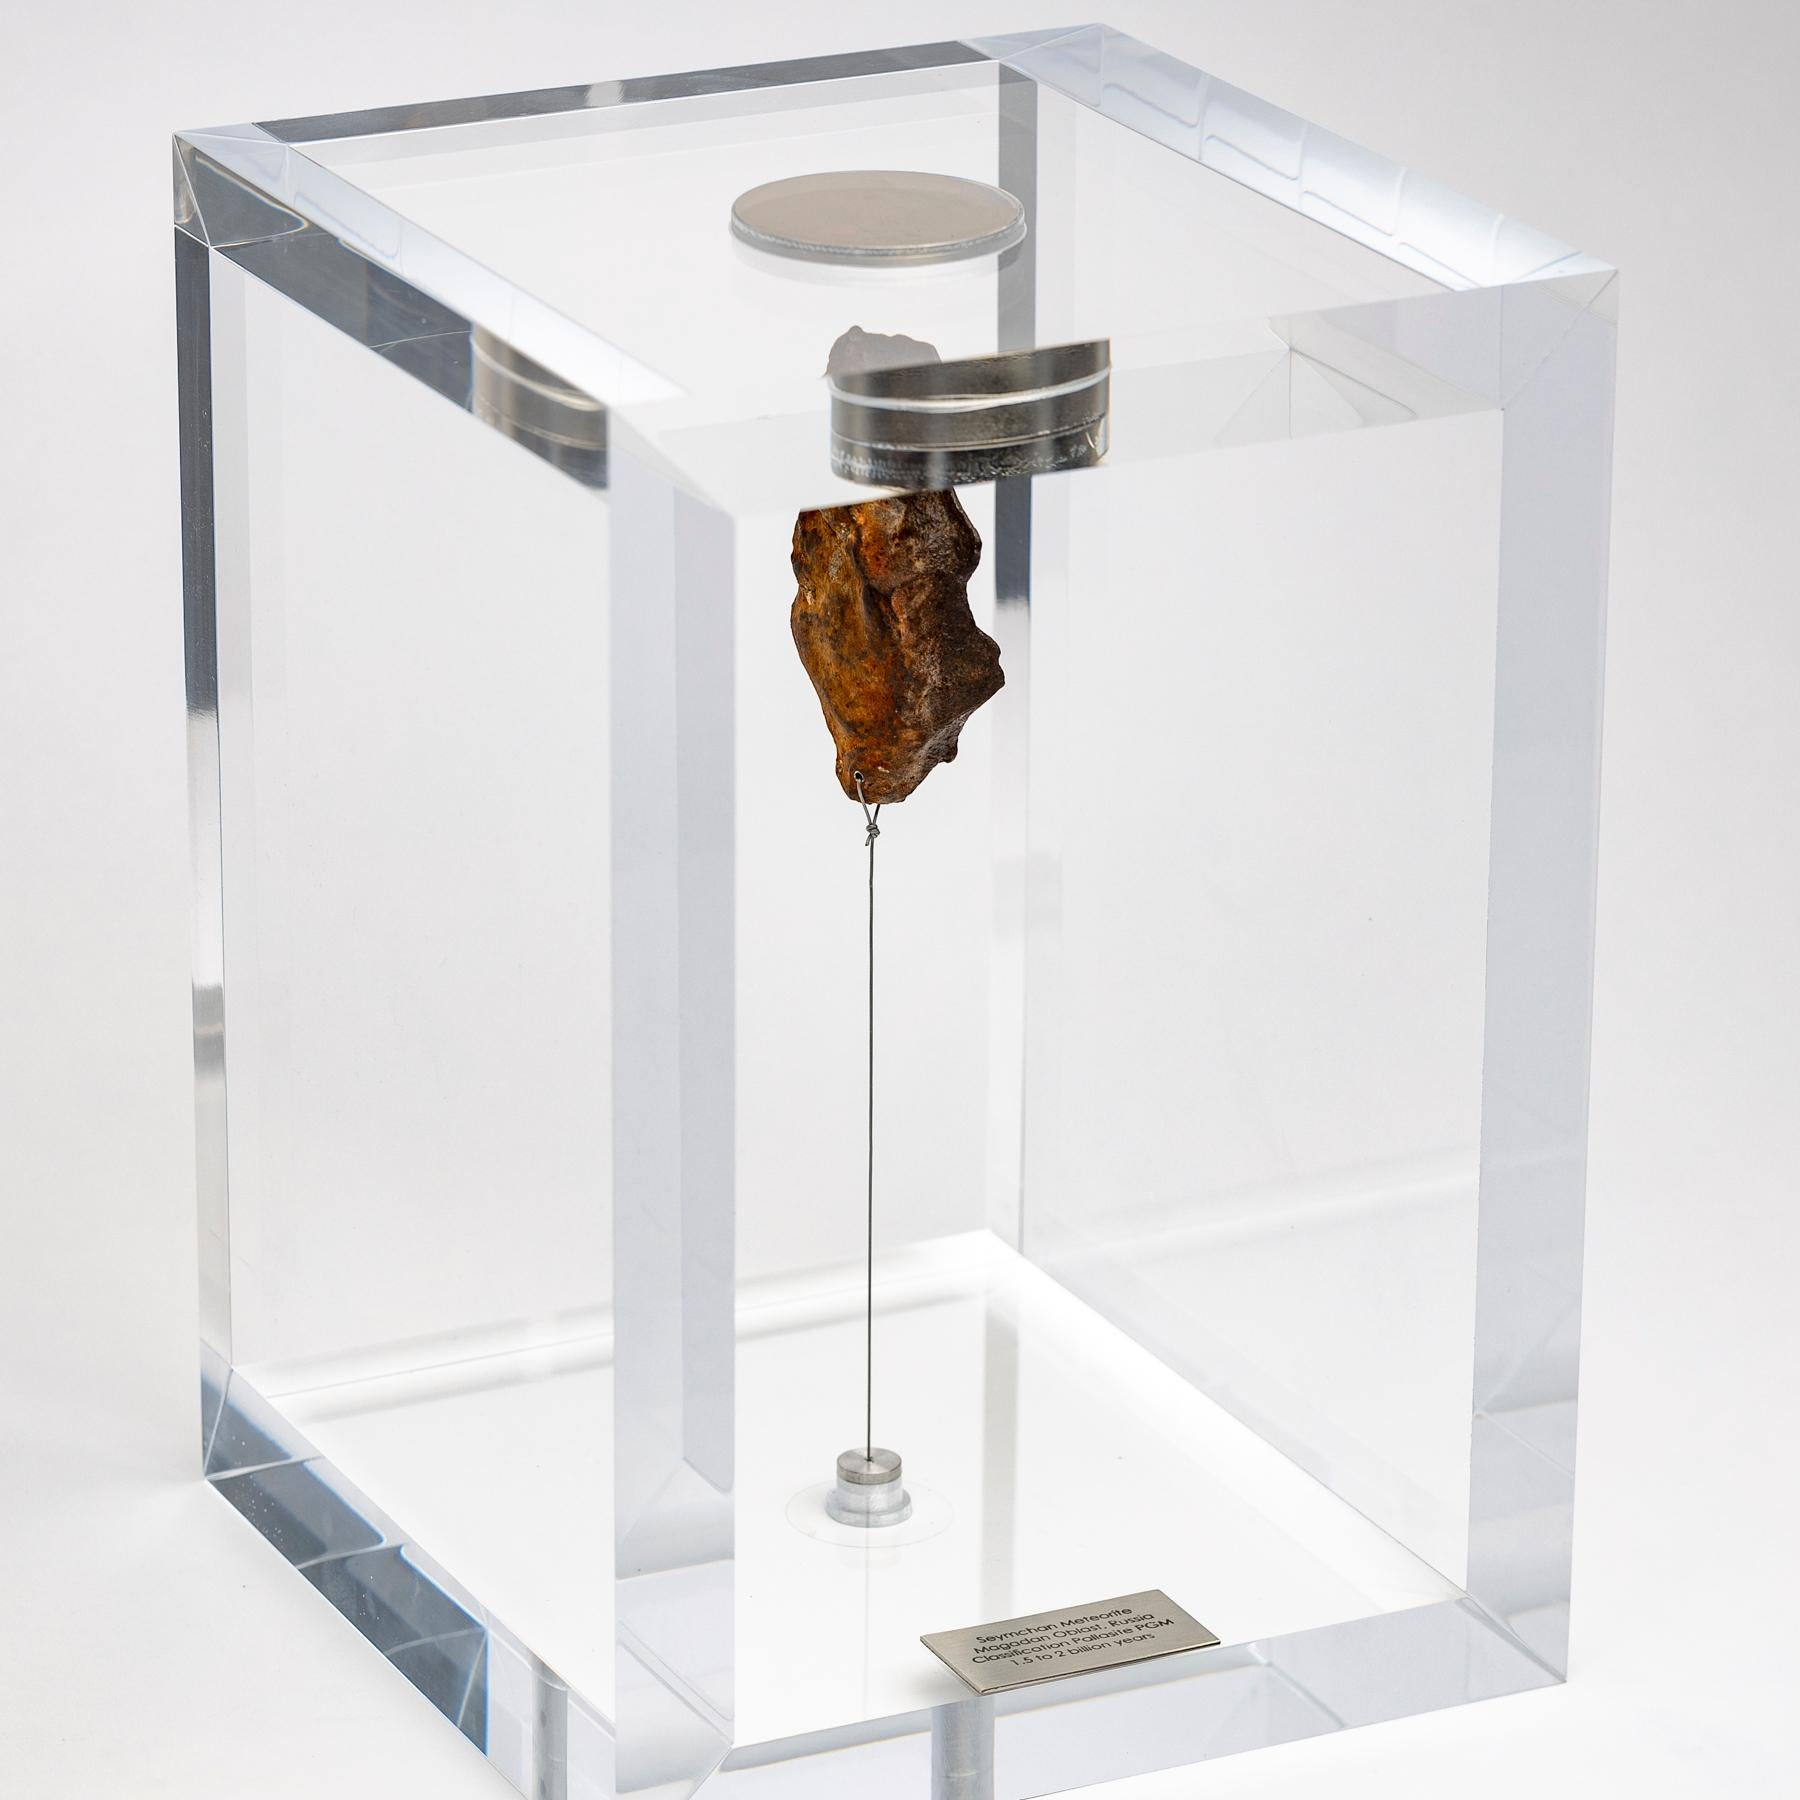 Mexican Original Design, Space Box, Egyptian Gebel Kamil Meteorite in Acrylic Box